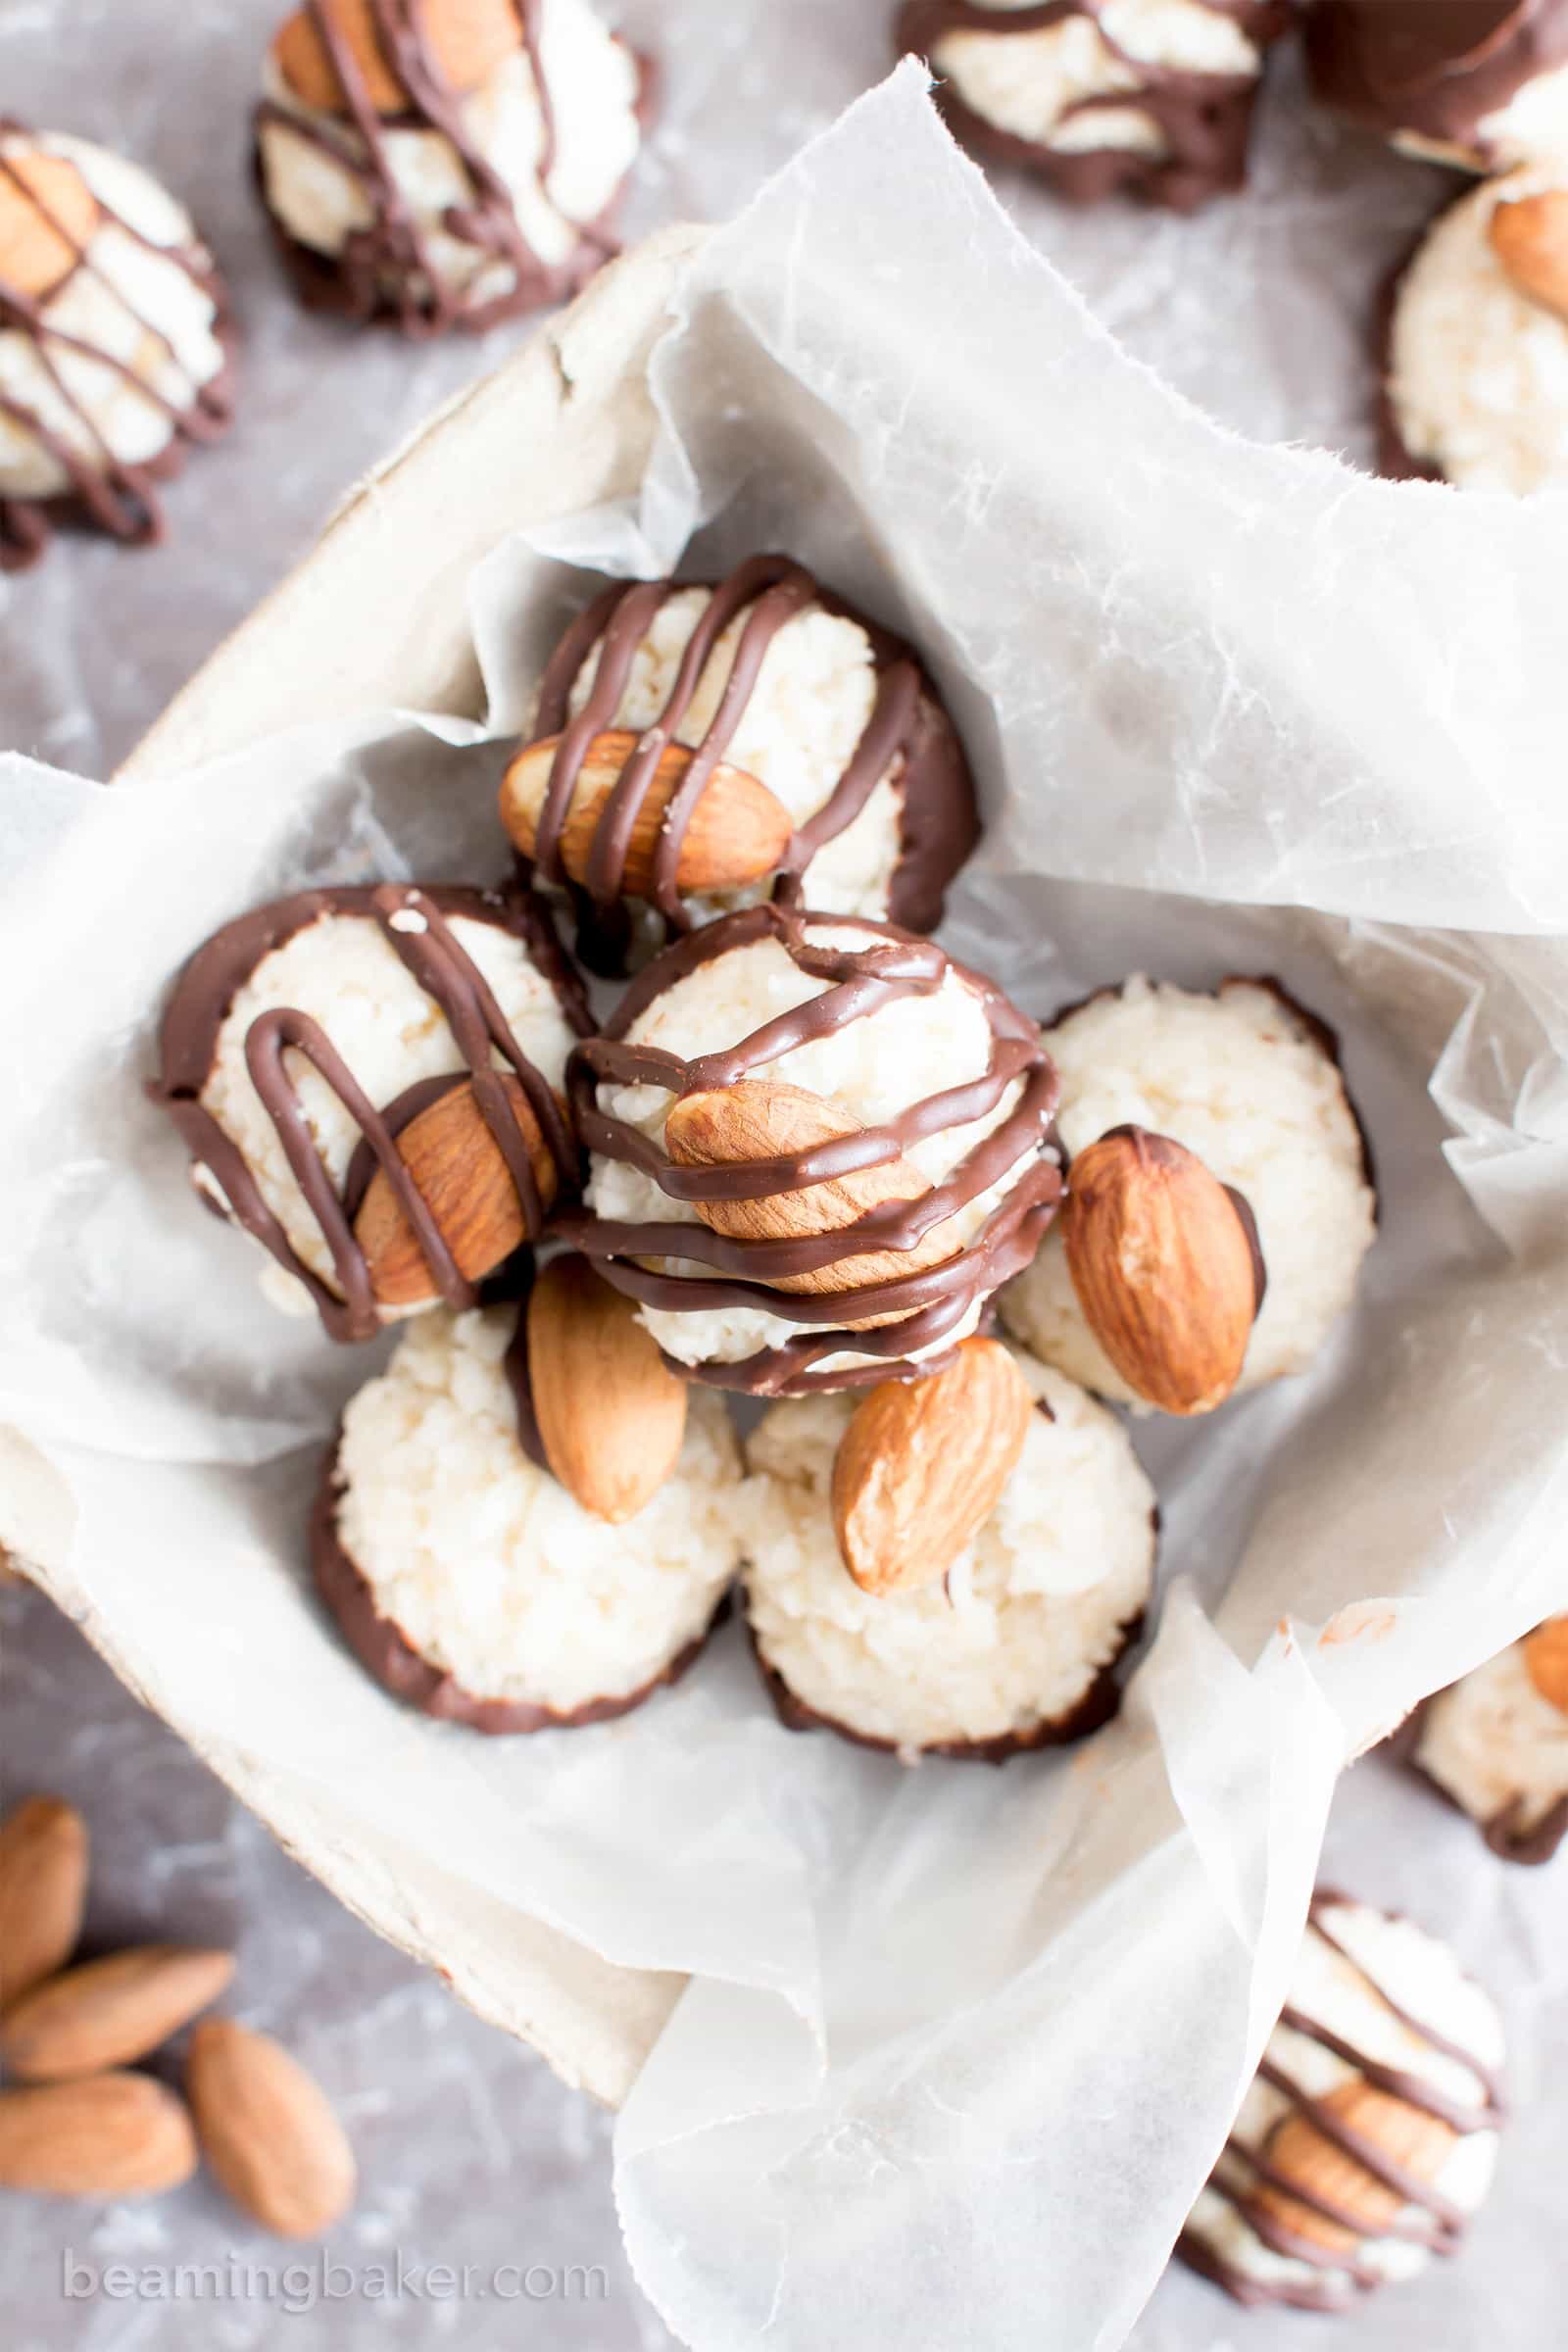 Paleo Vegan Almond Joy Truffles (V, GF): a fun recipe for homemade candy truffles that taste just like Almond Joy! #Vegan #GlutenFree #Paleo #Candy #Dessert | Recipe on BeamingBaker.com